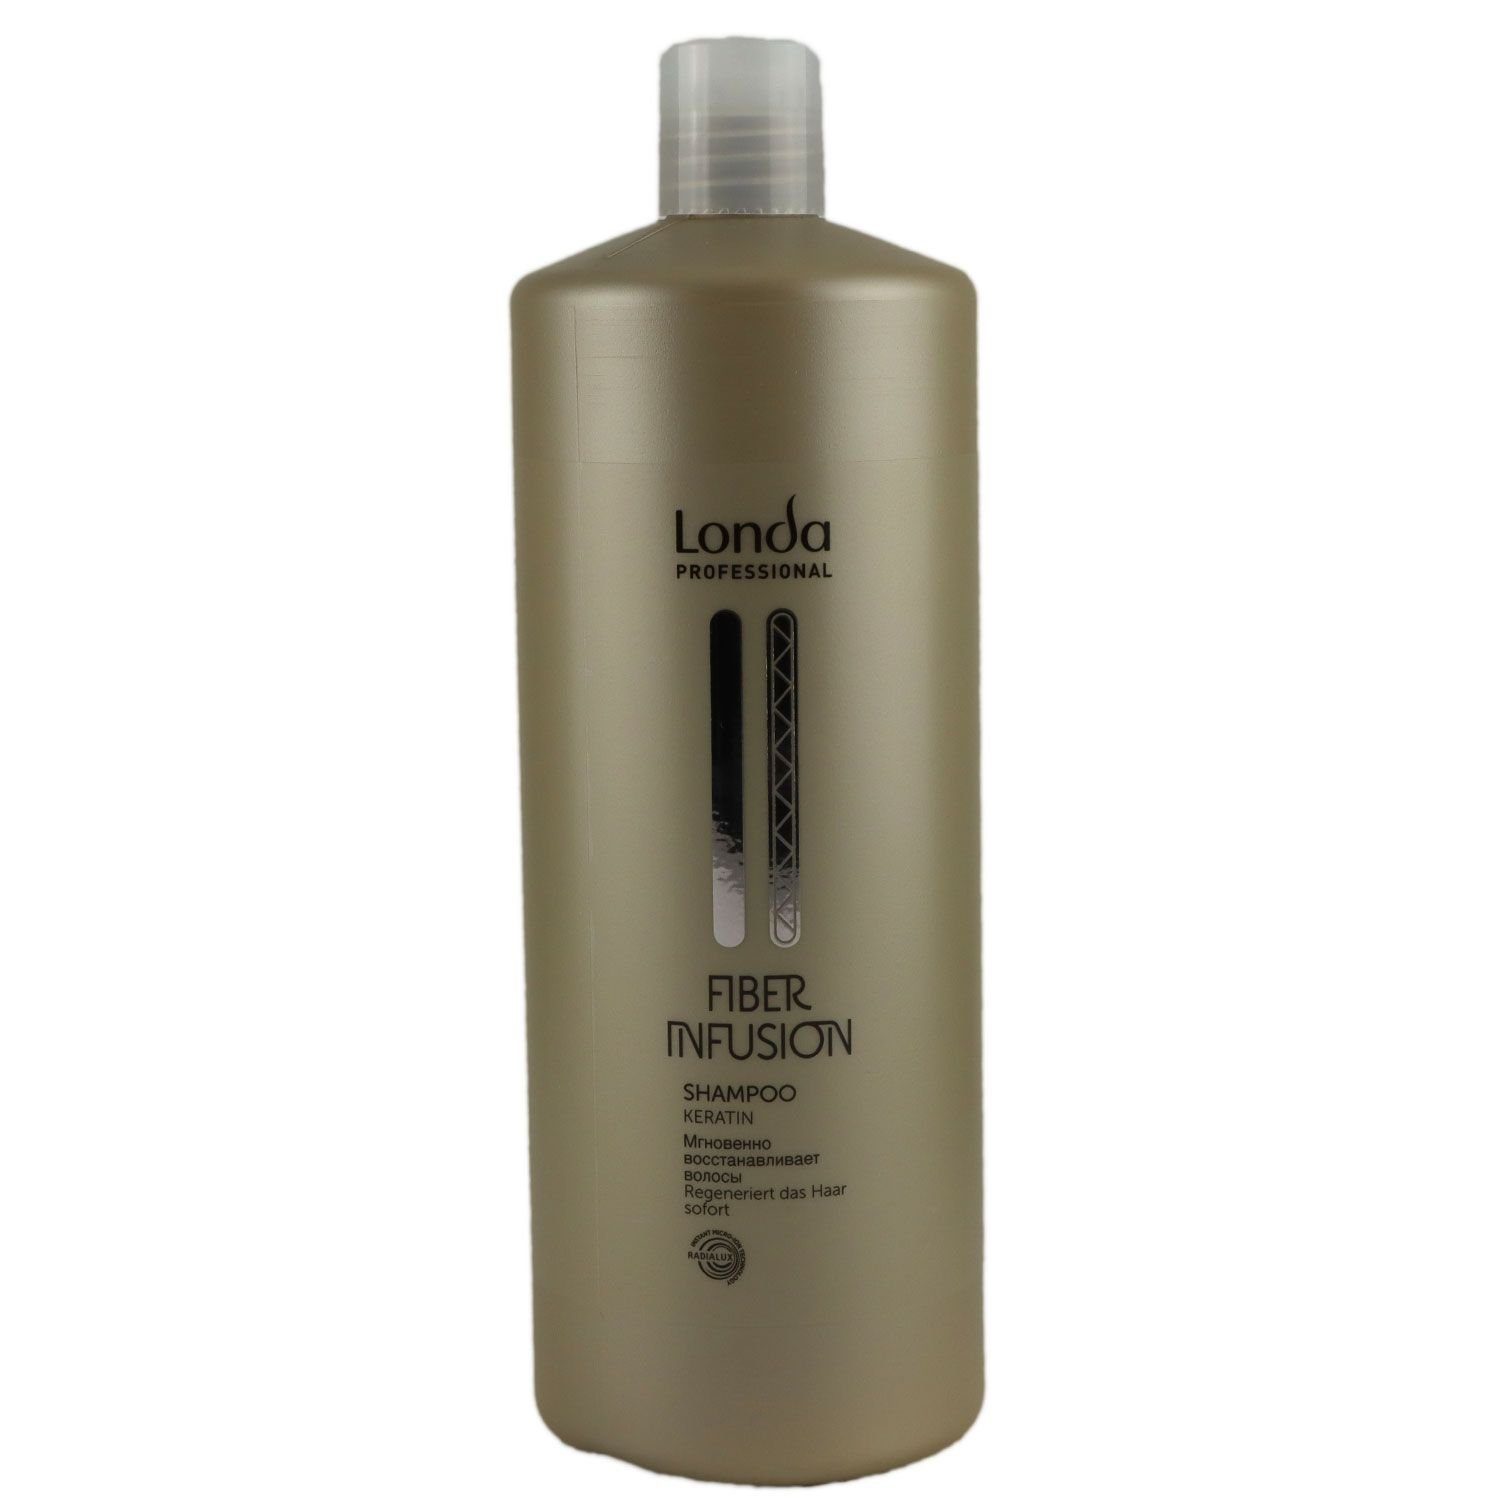 Shampoo Fiber Infusion 1000 Londa für Professional ml Haarshampoo geschädigtes Haar